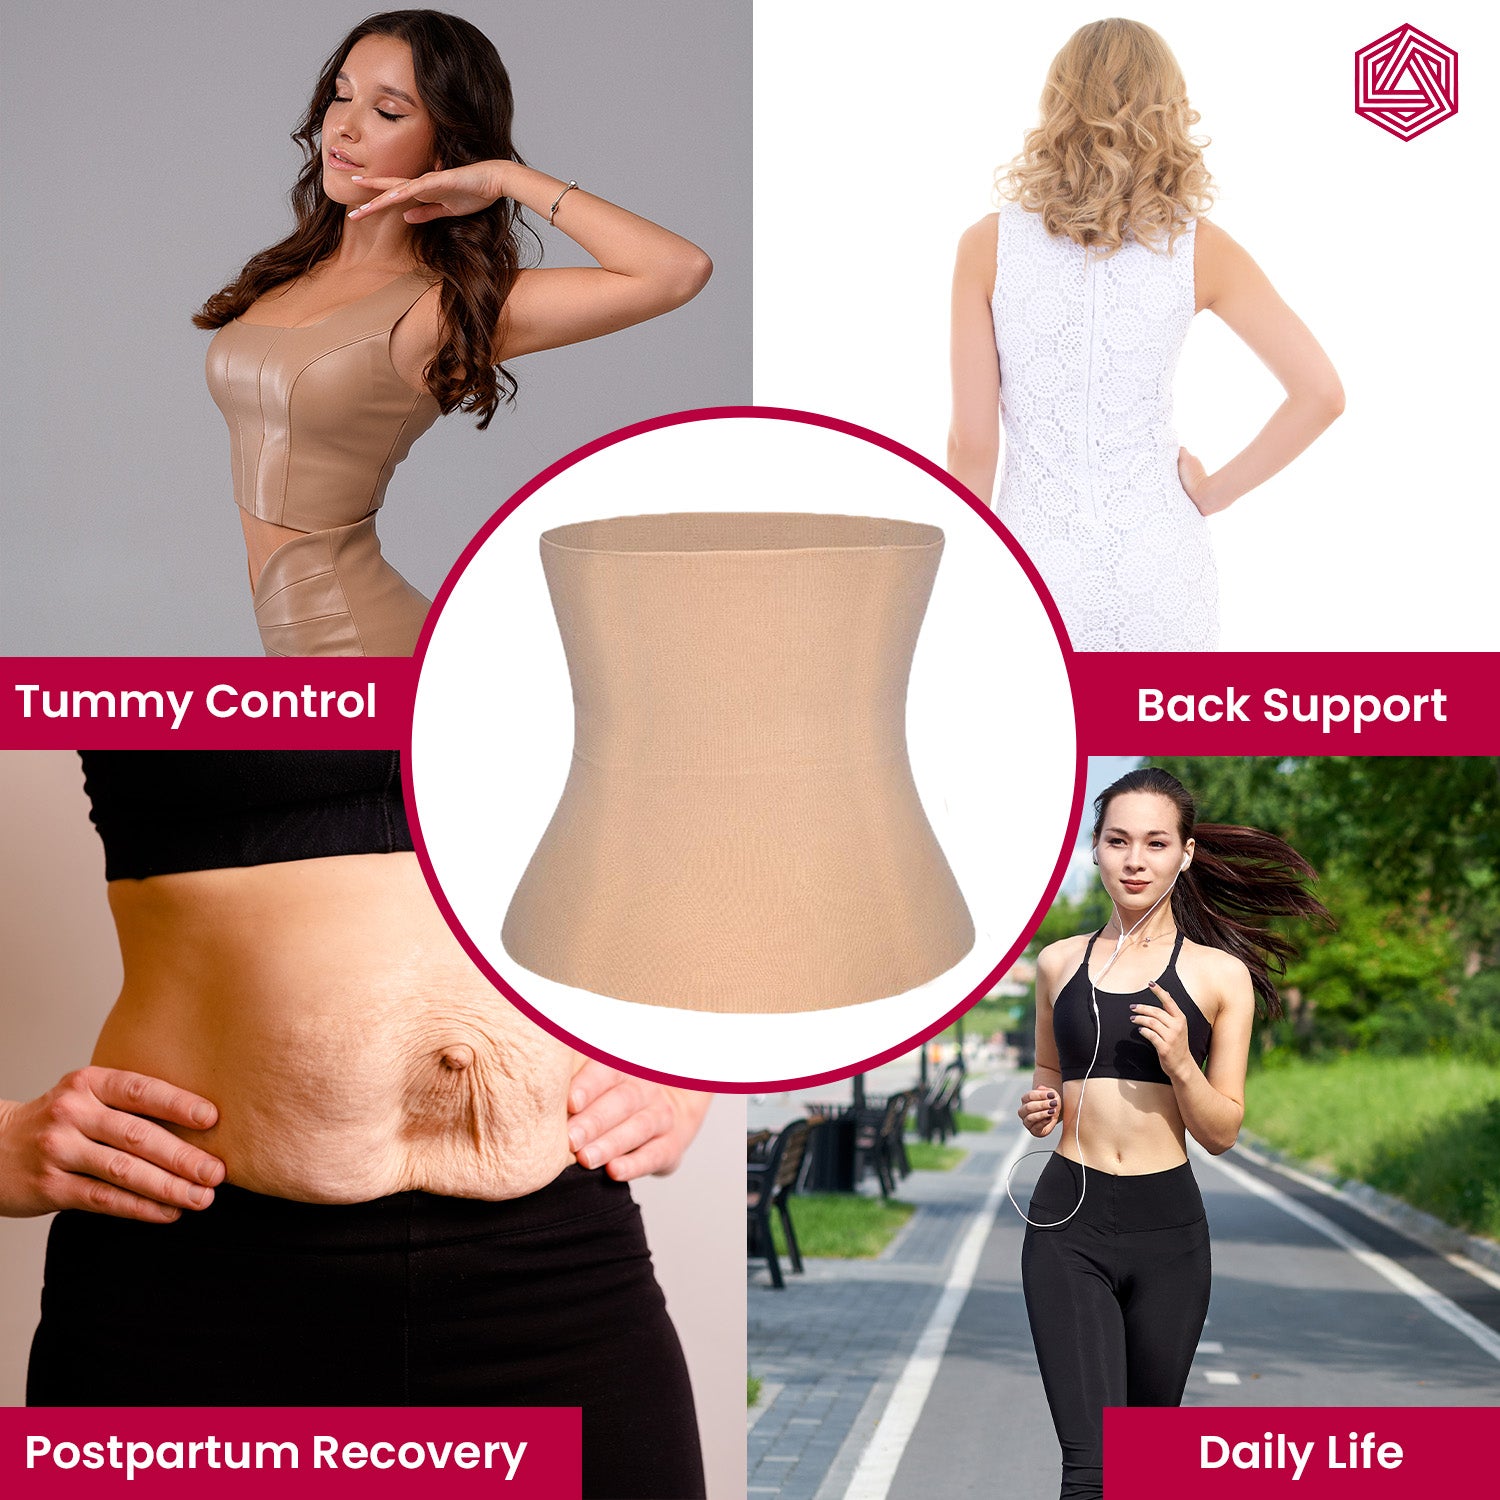 Boldfit Skin Tummy Tucker For Women Waist Body Shape - Size 28-32Inch